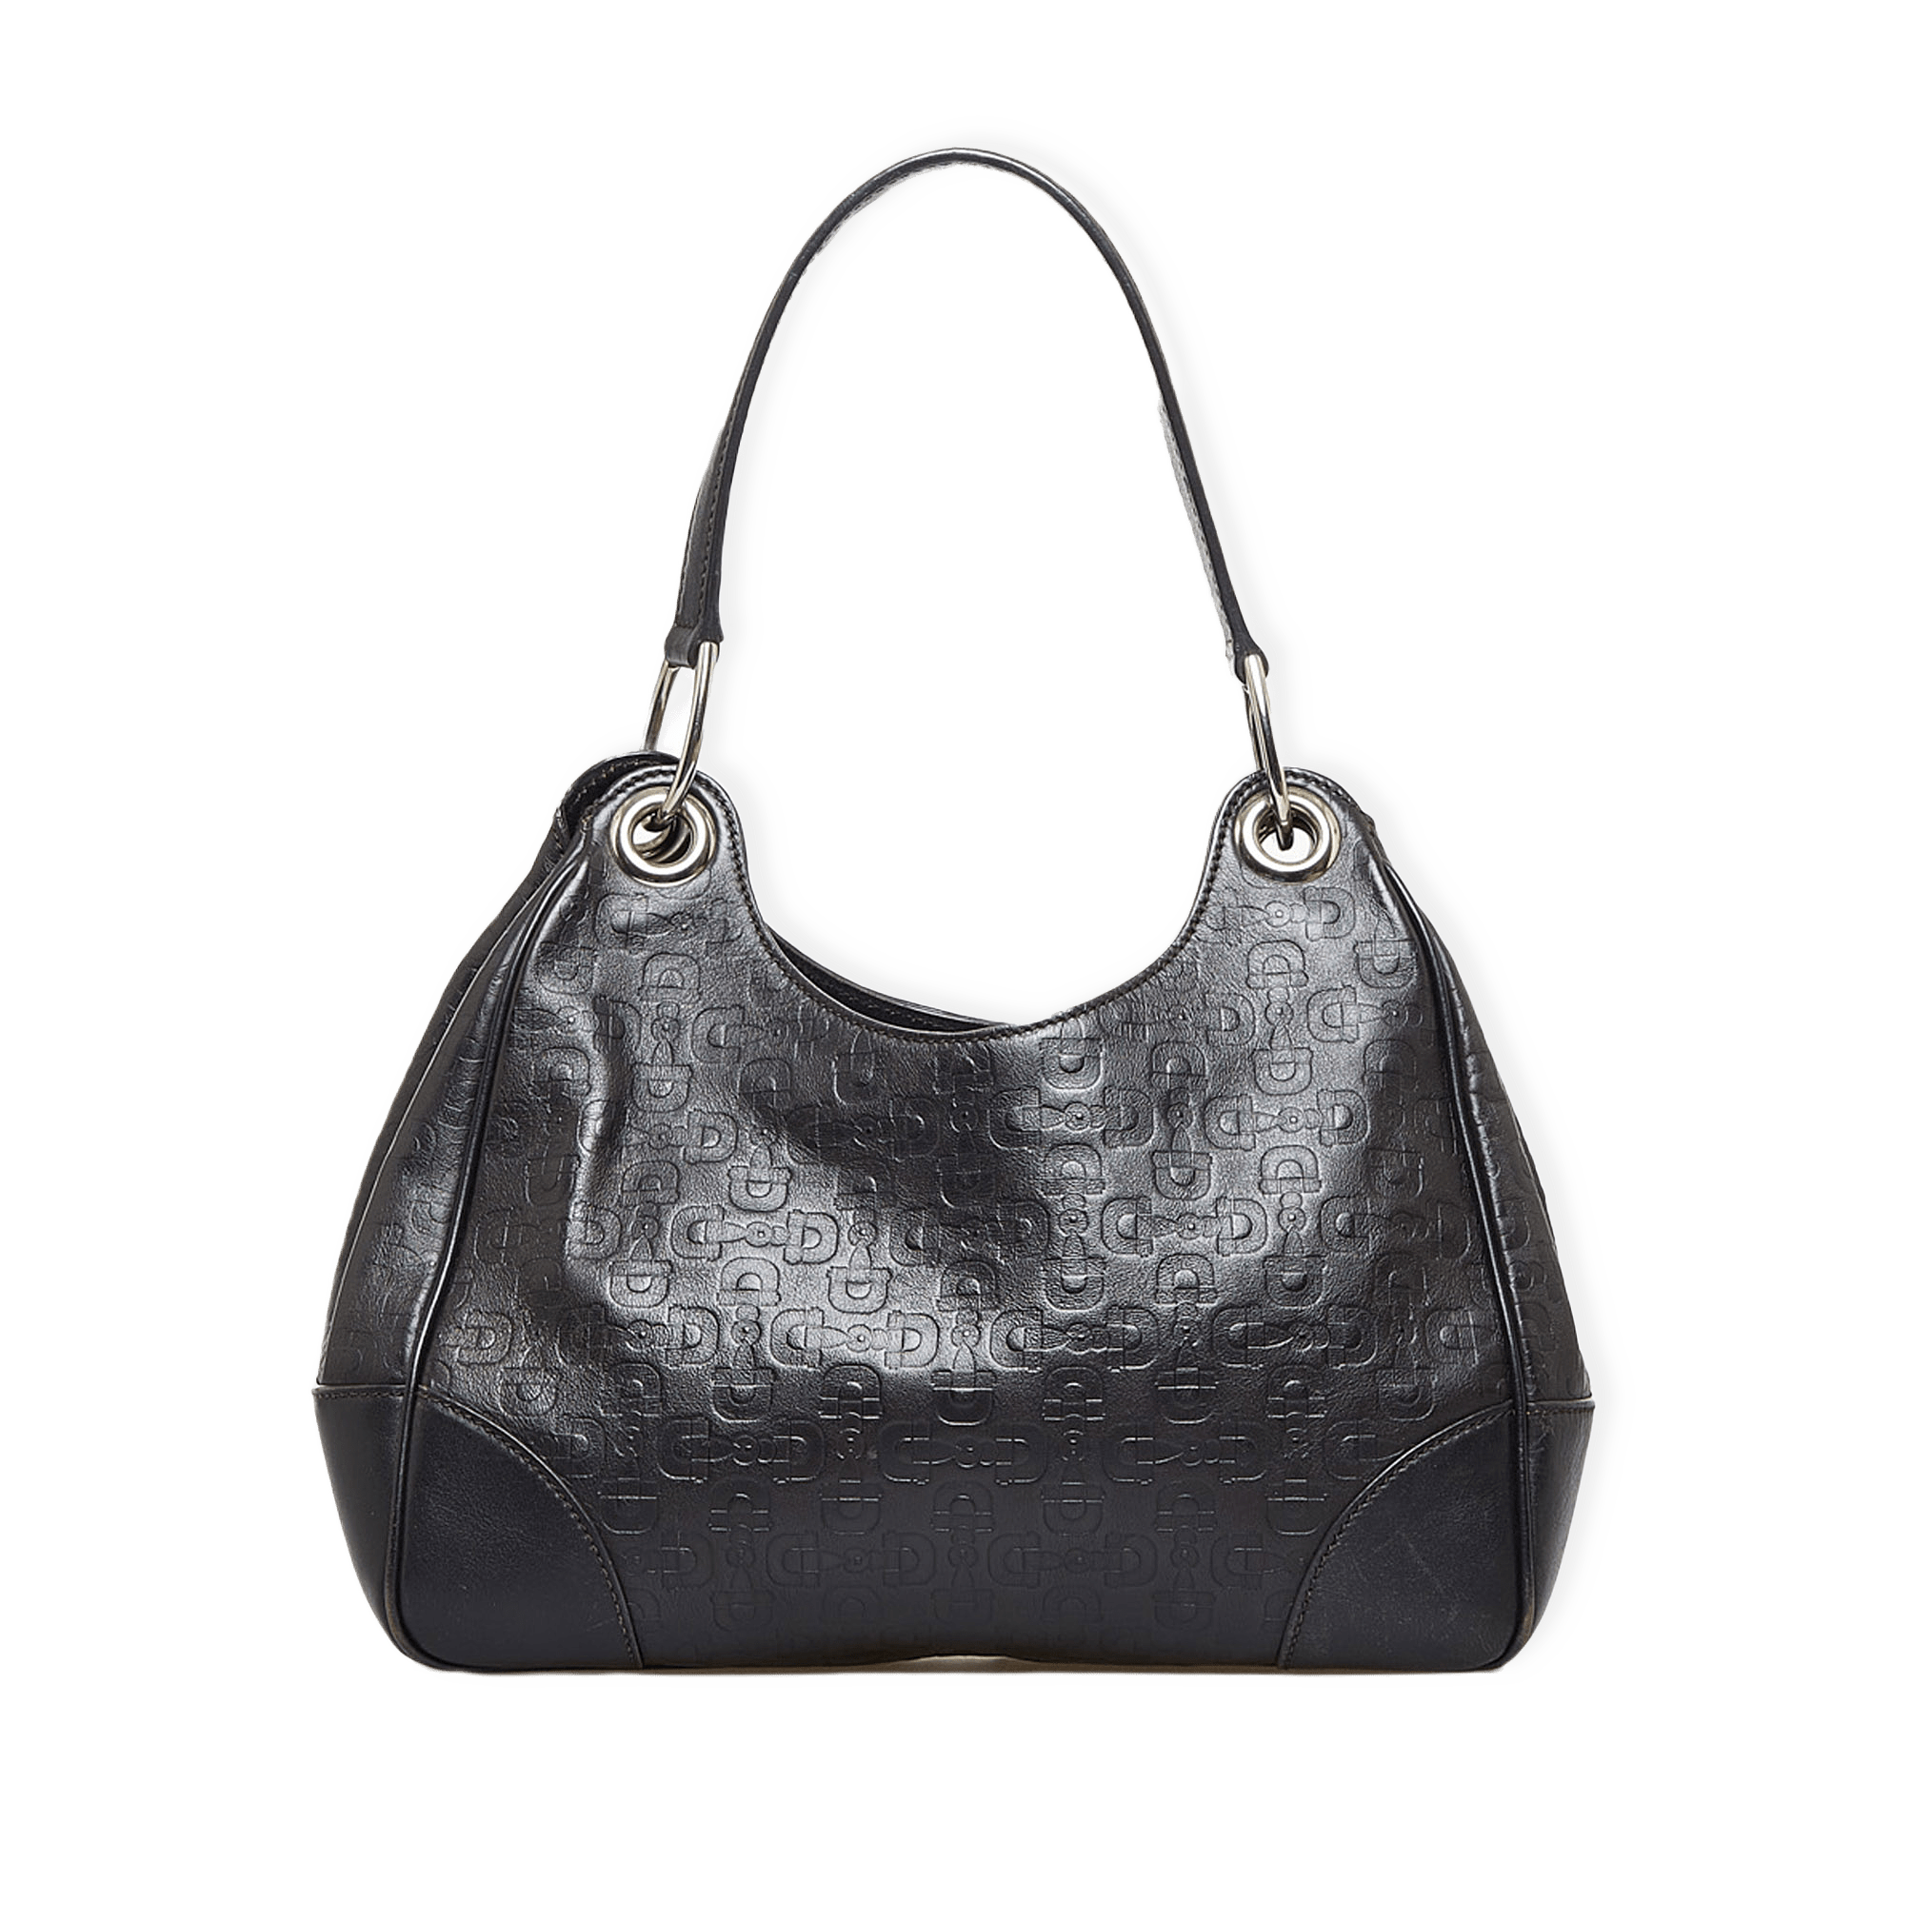 Gucci Horsebit Embossed Leather Shoulder Bag från Luxclusif